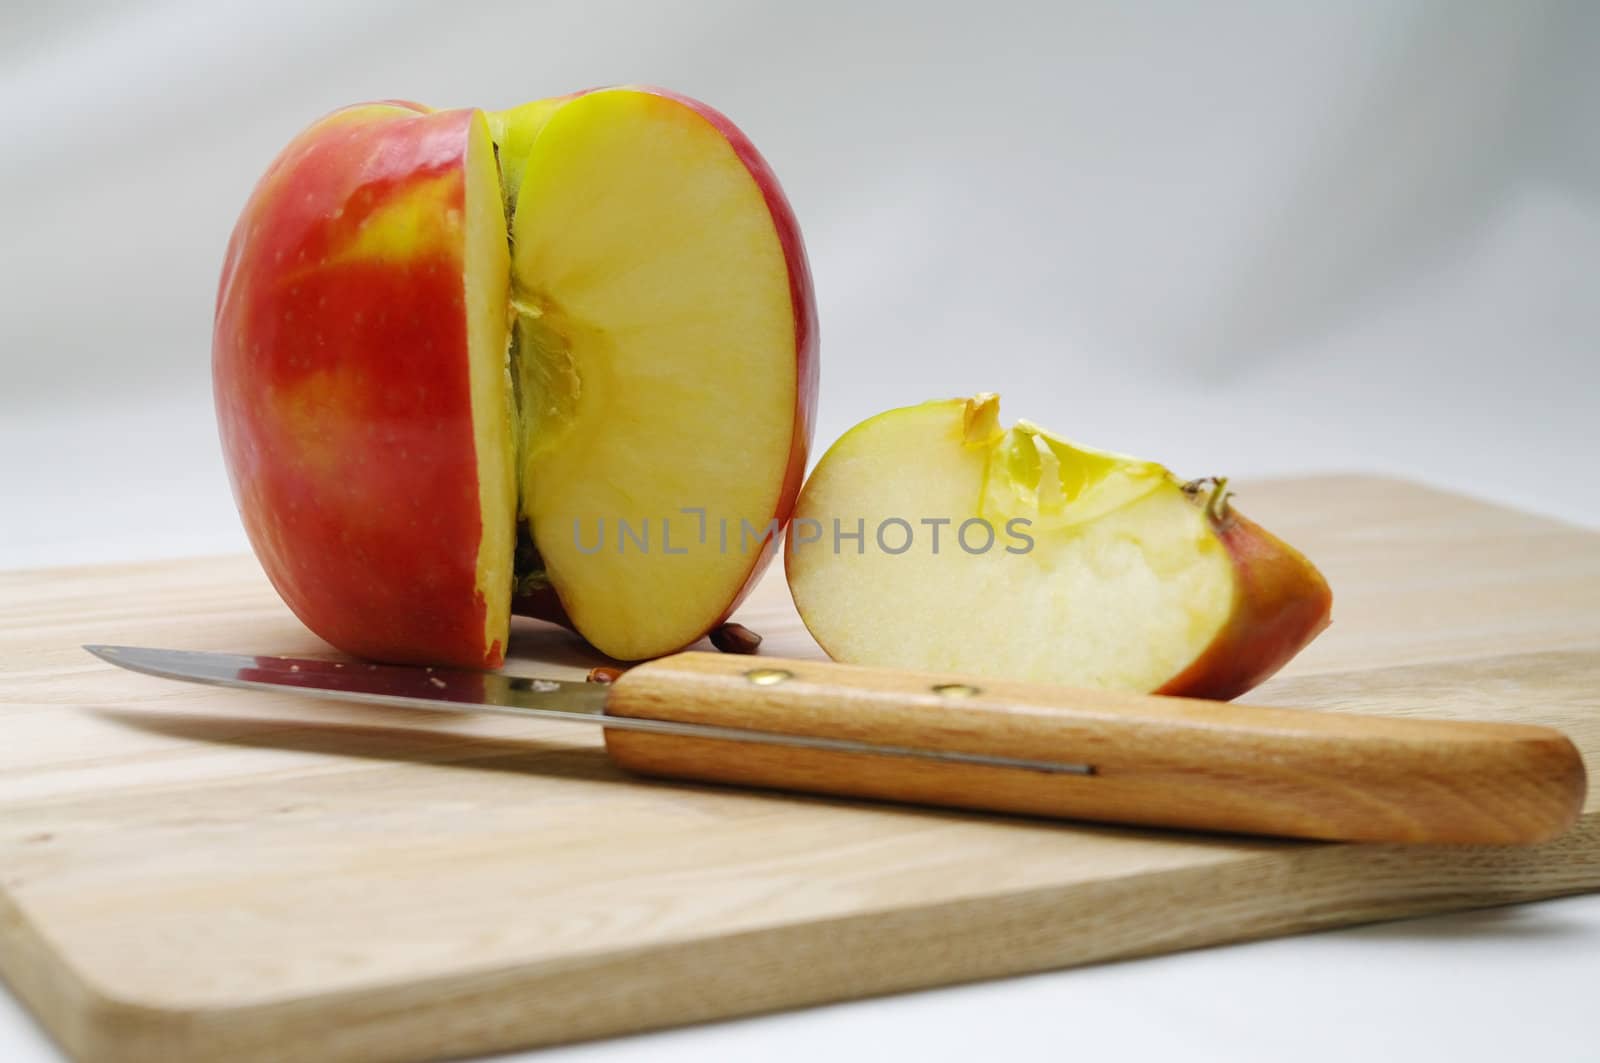 Sliced Apple by edcorey